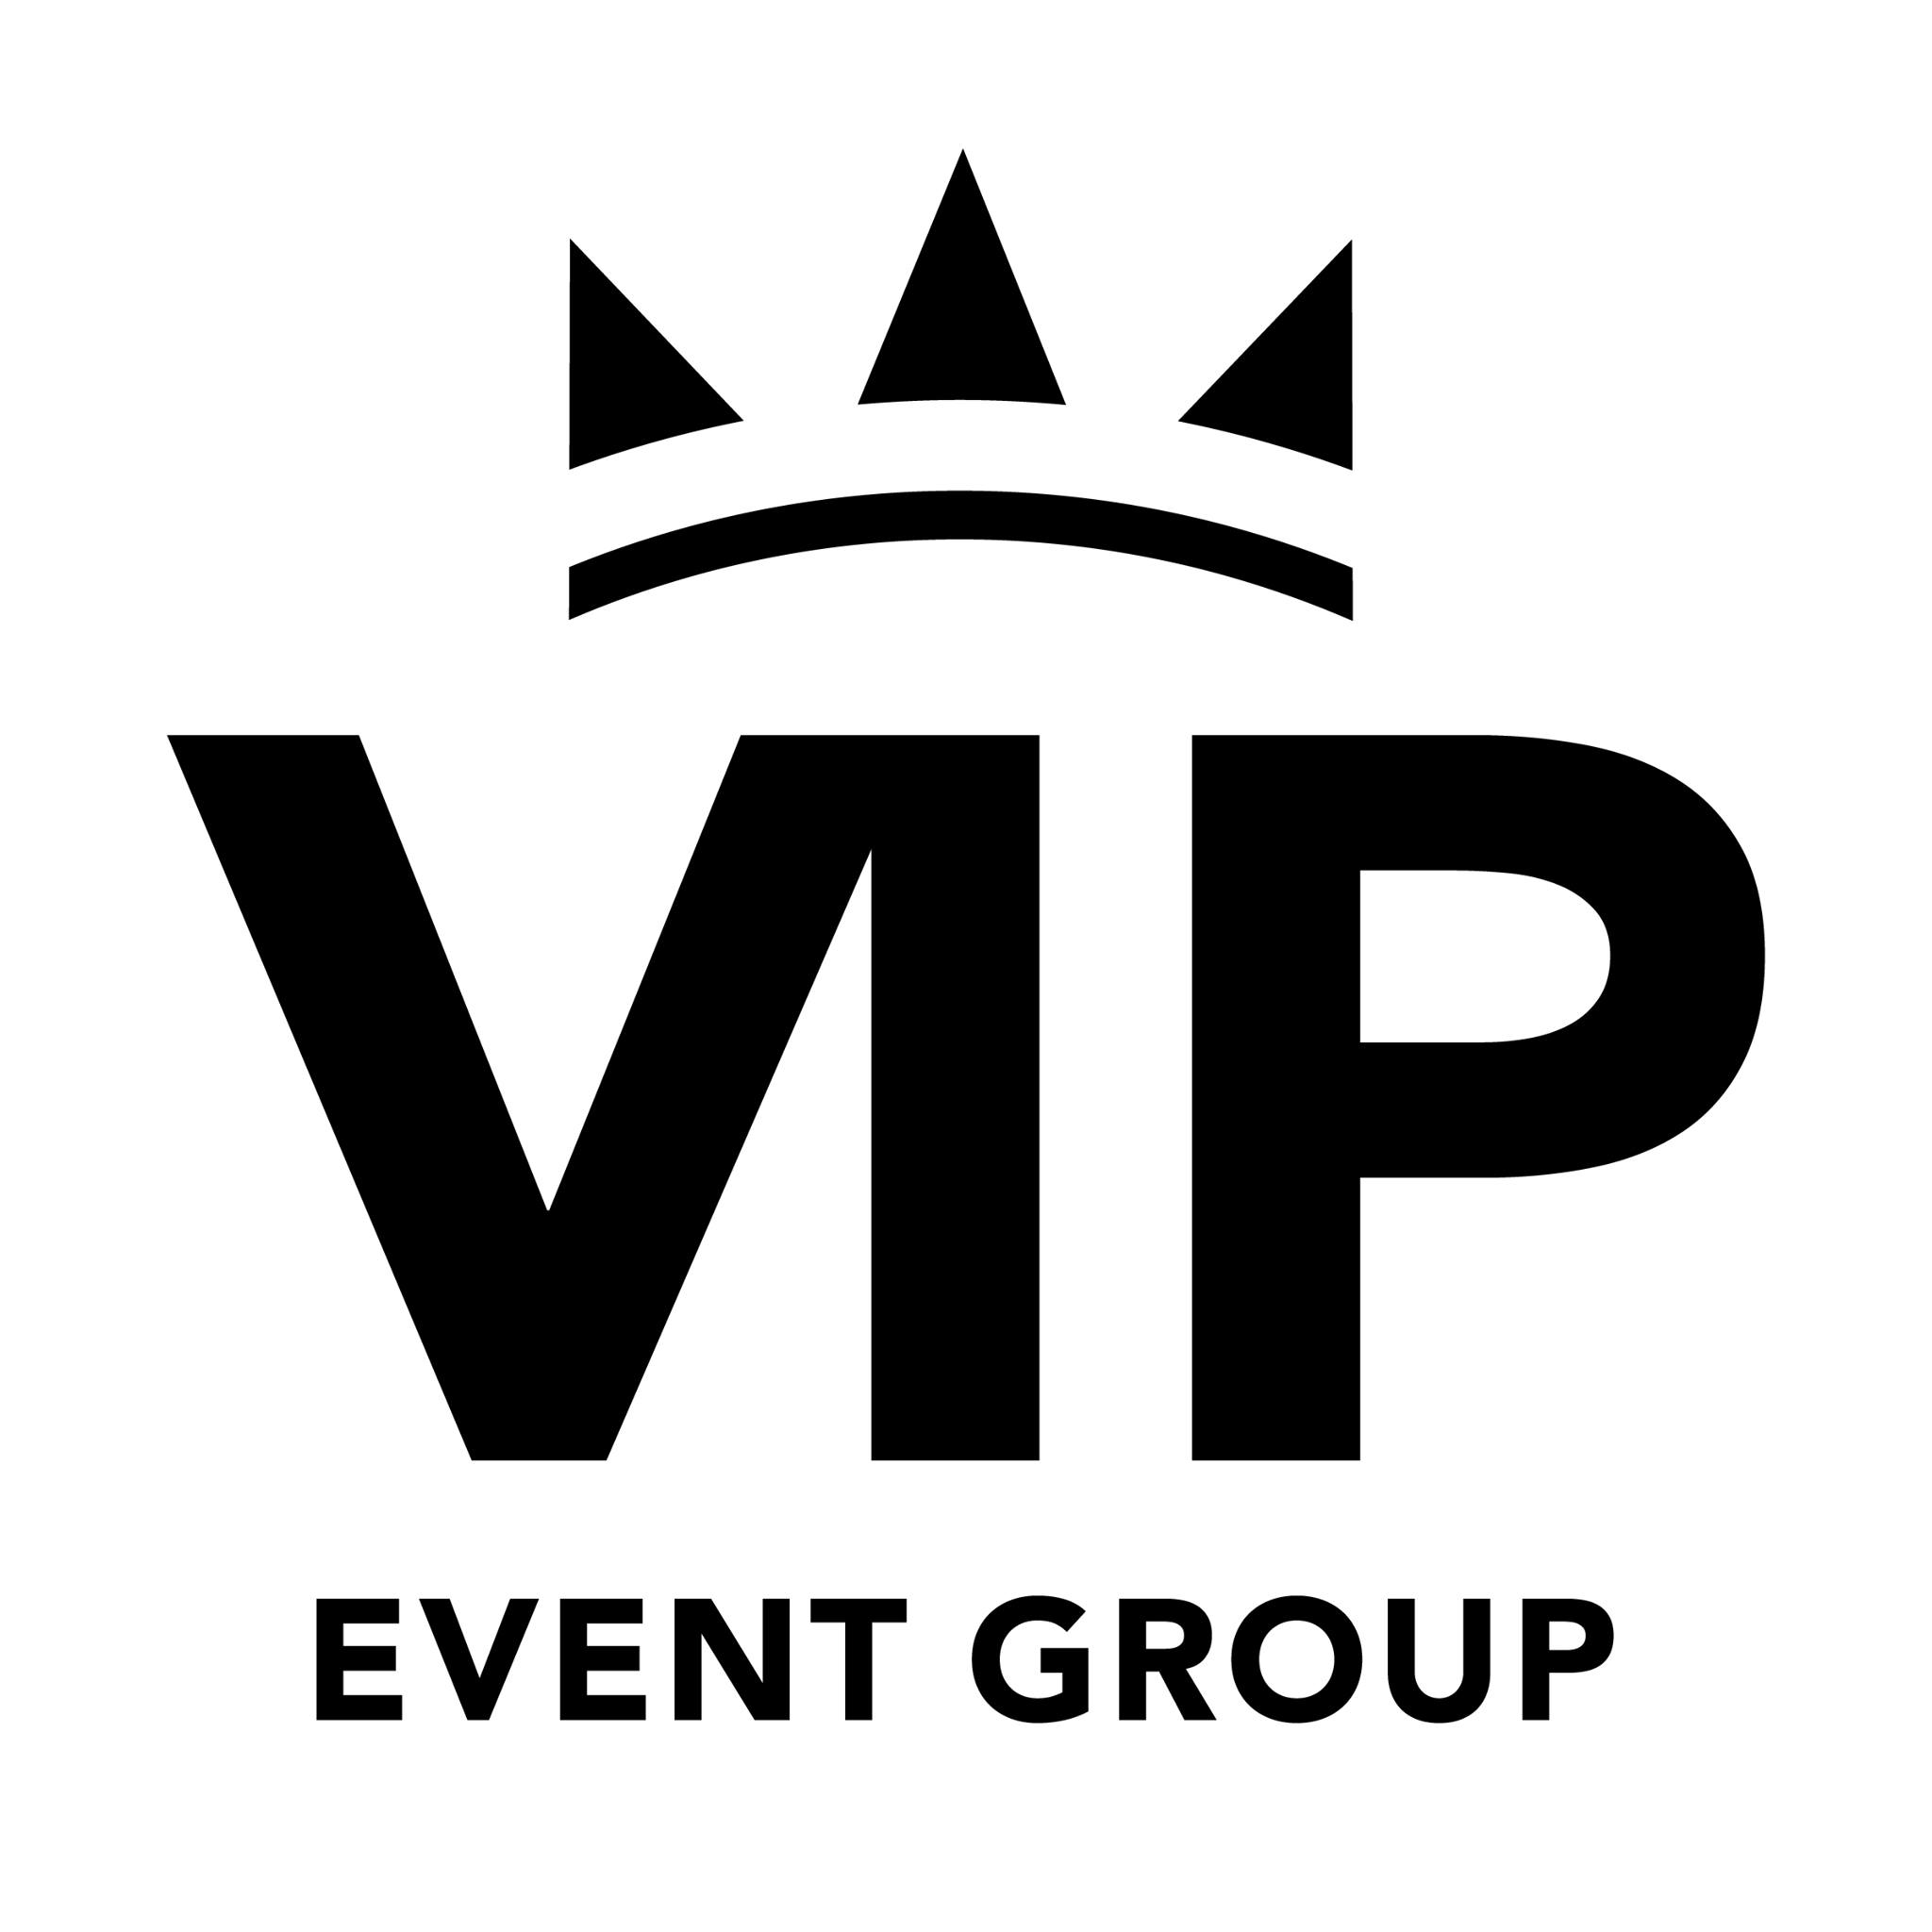 VIP. VIP Group. Meidan VIP event. VIP Империя надпись. Вип ивент шиндо